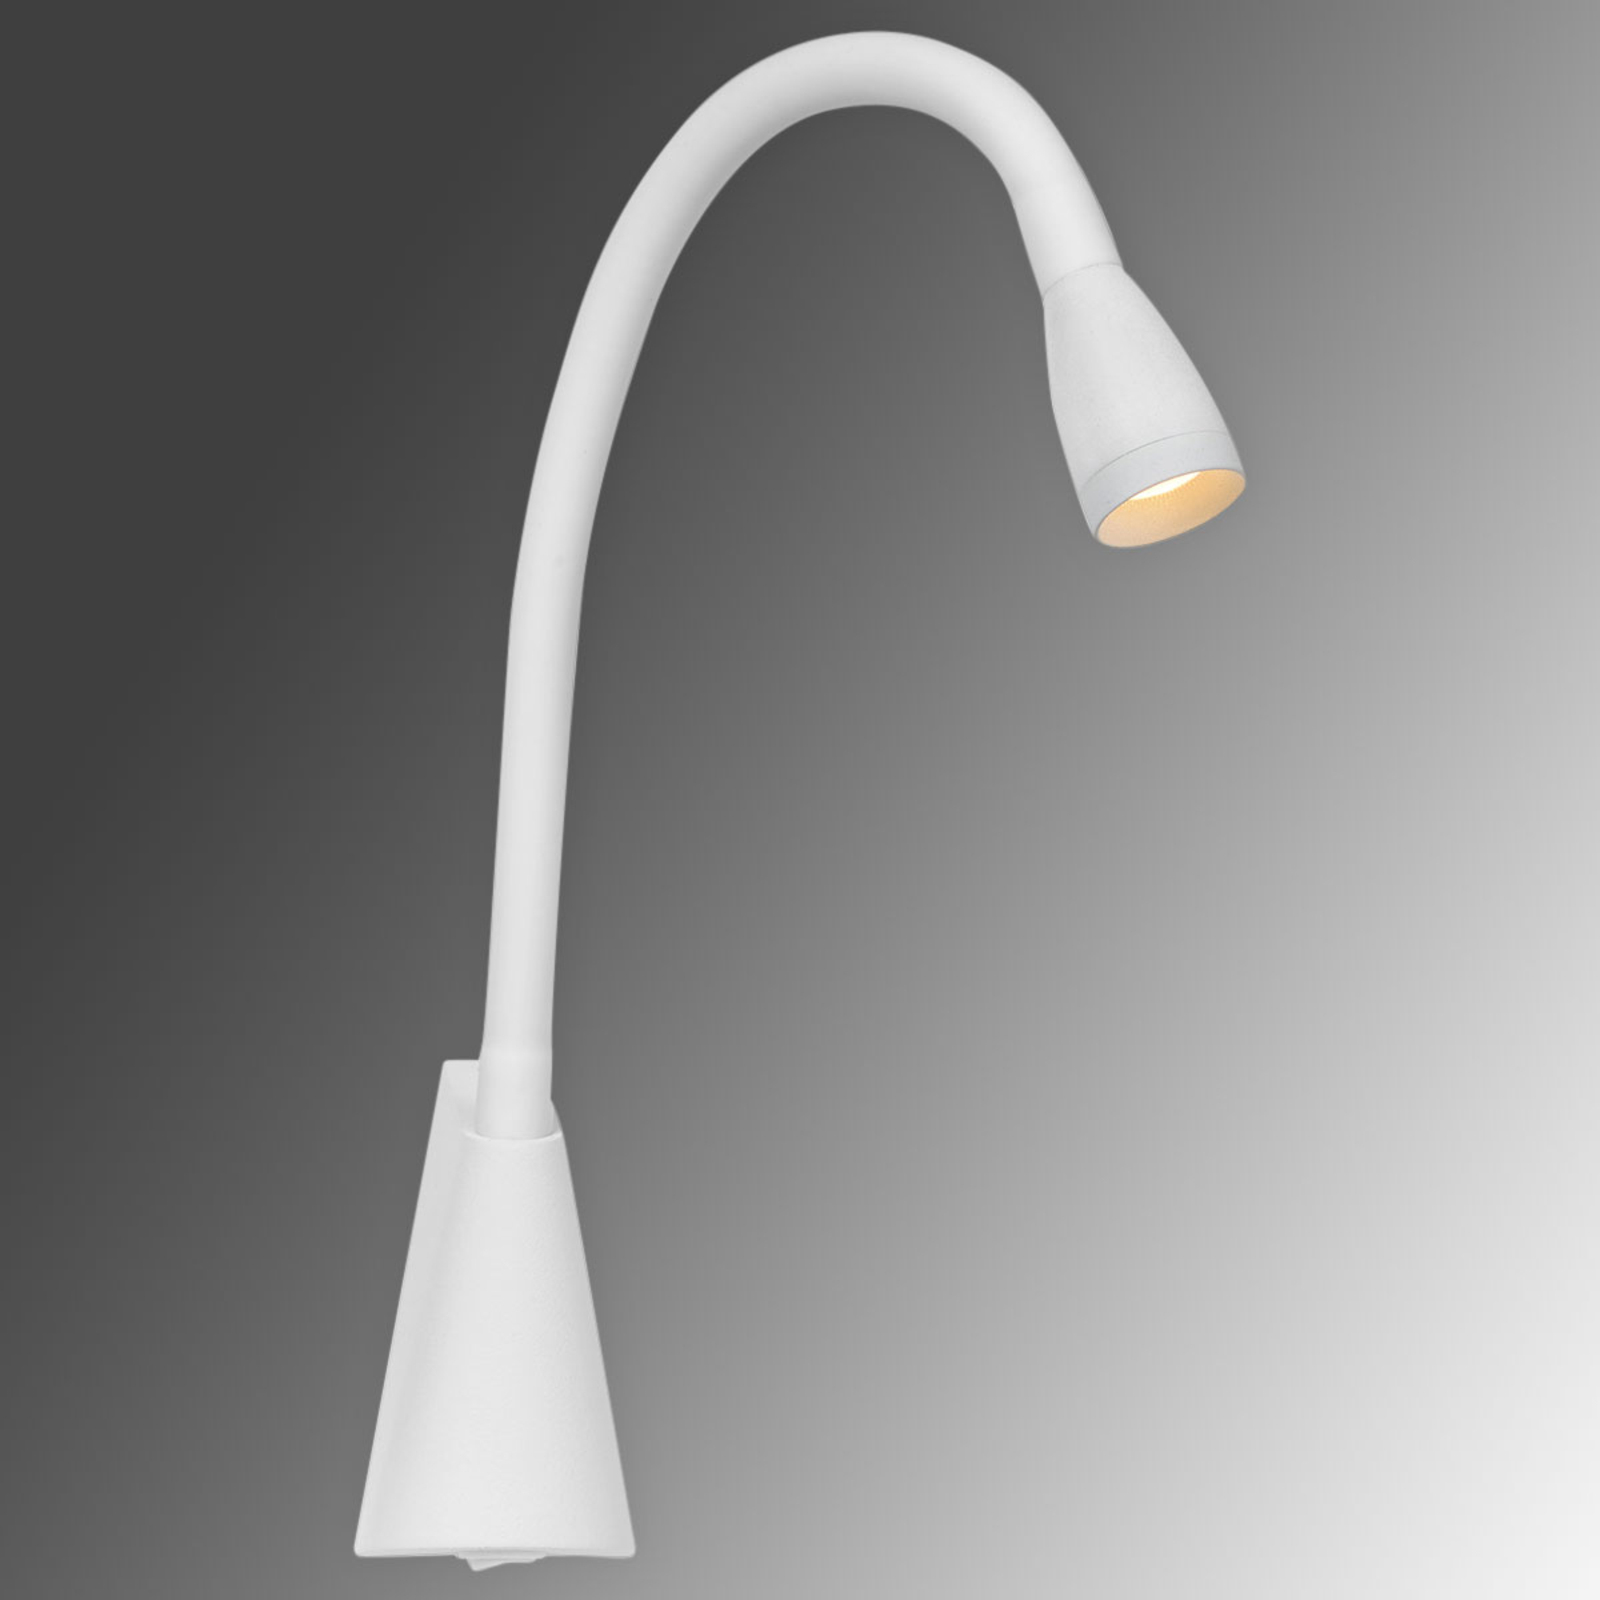 Gale buigbare LED wandlamp in wit